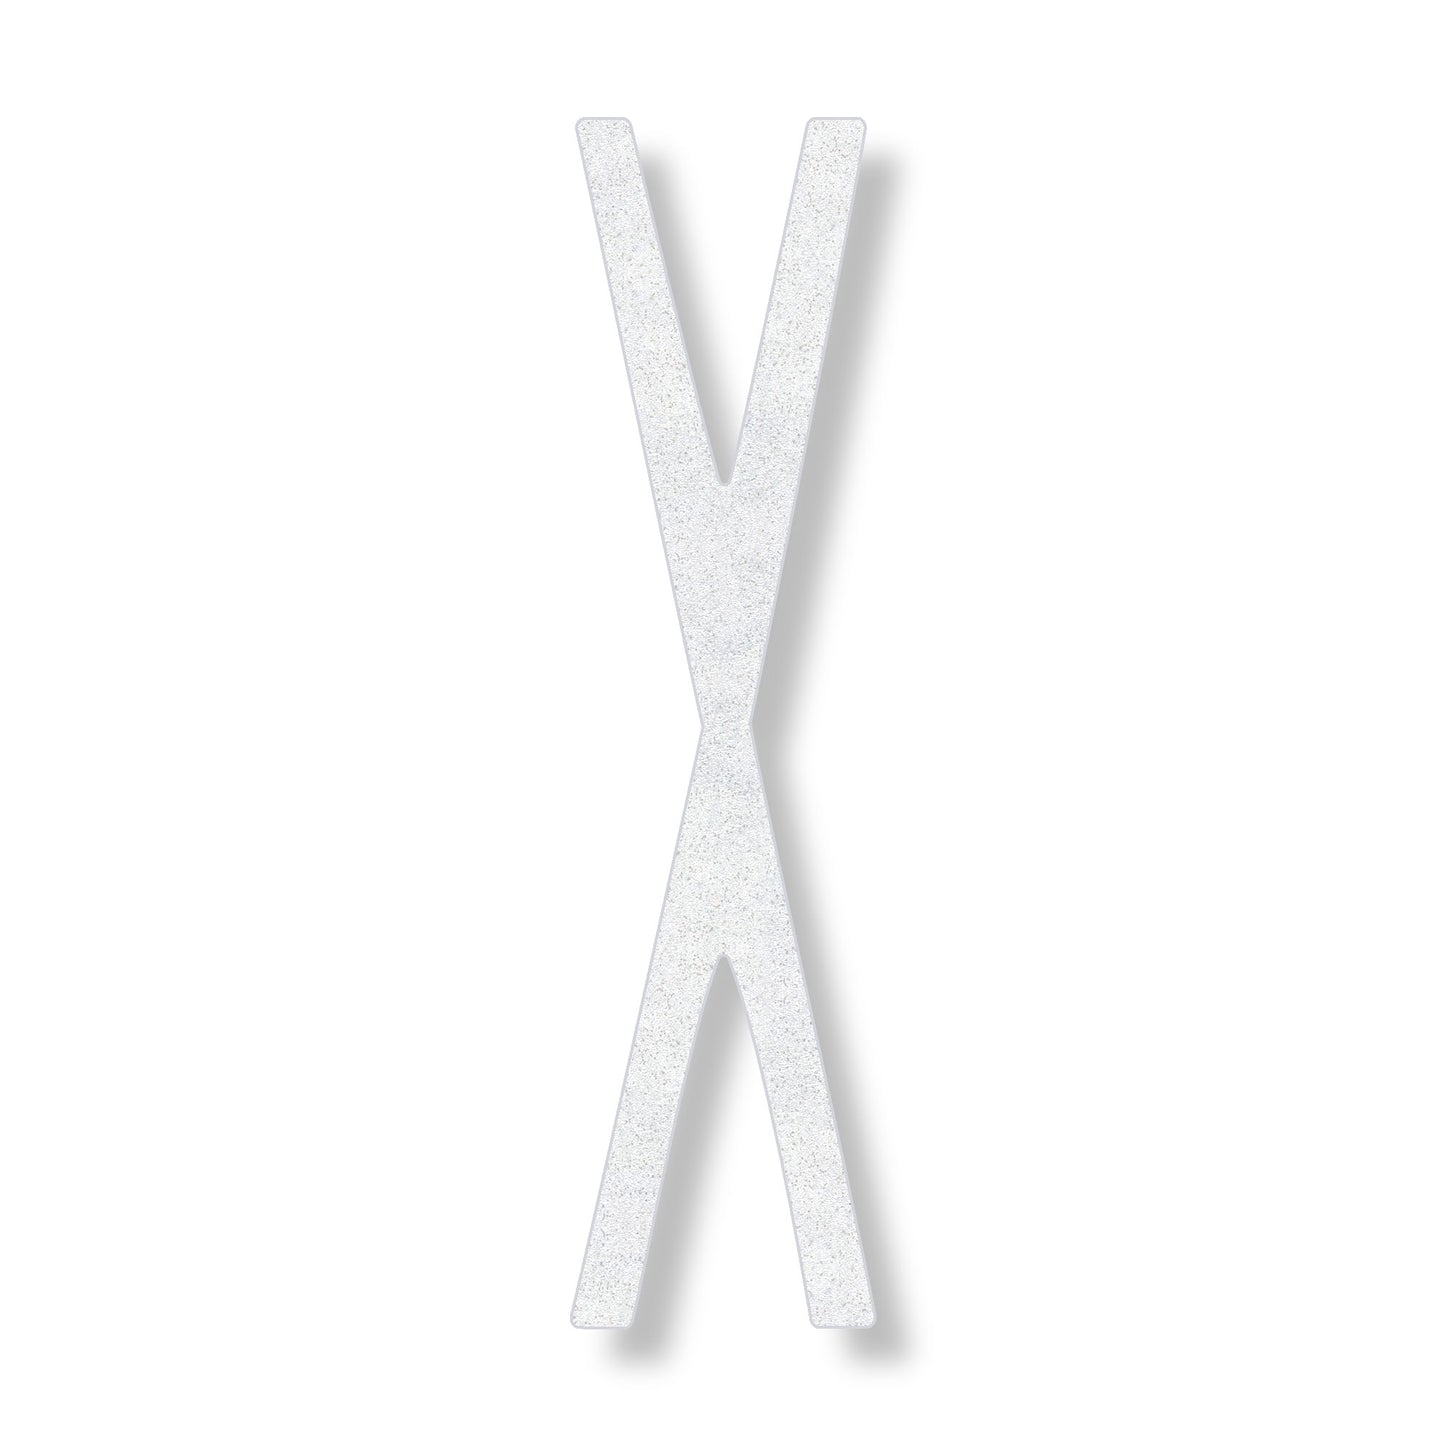 Letter X in white